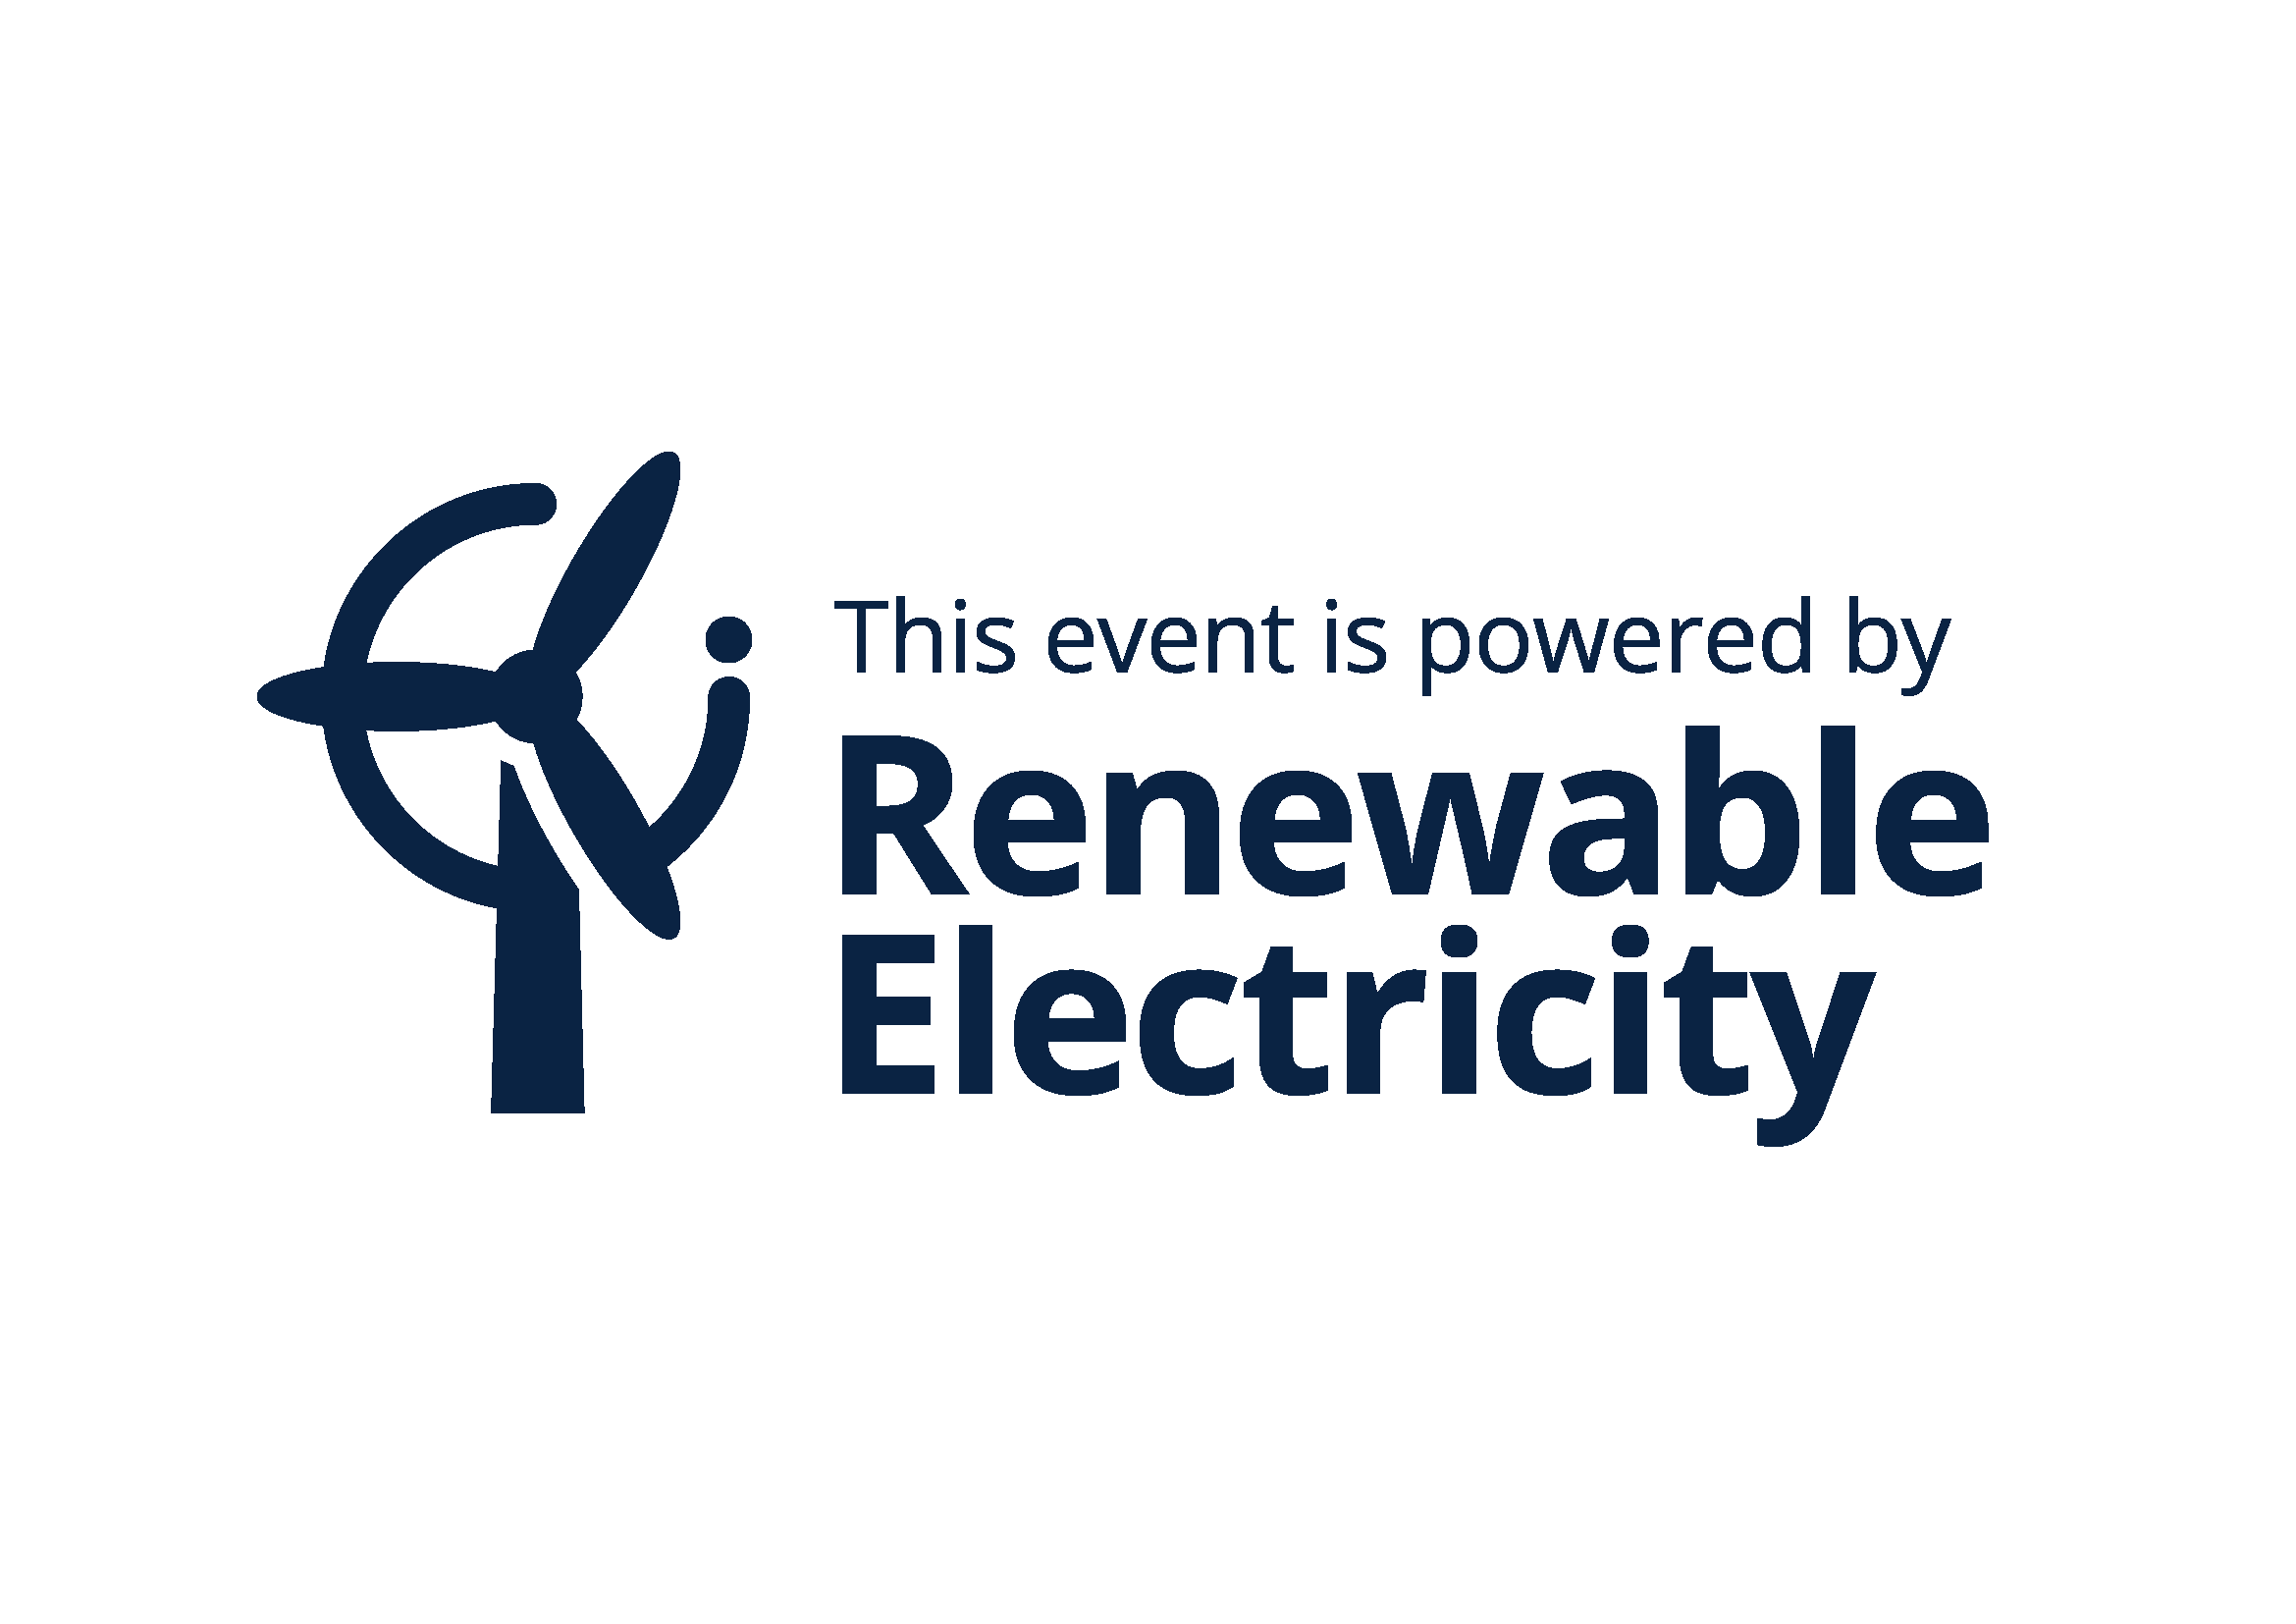 Renewable electricity event